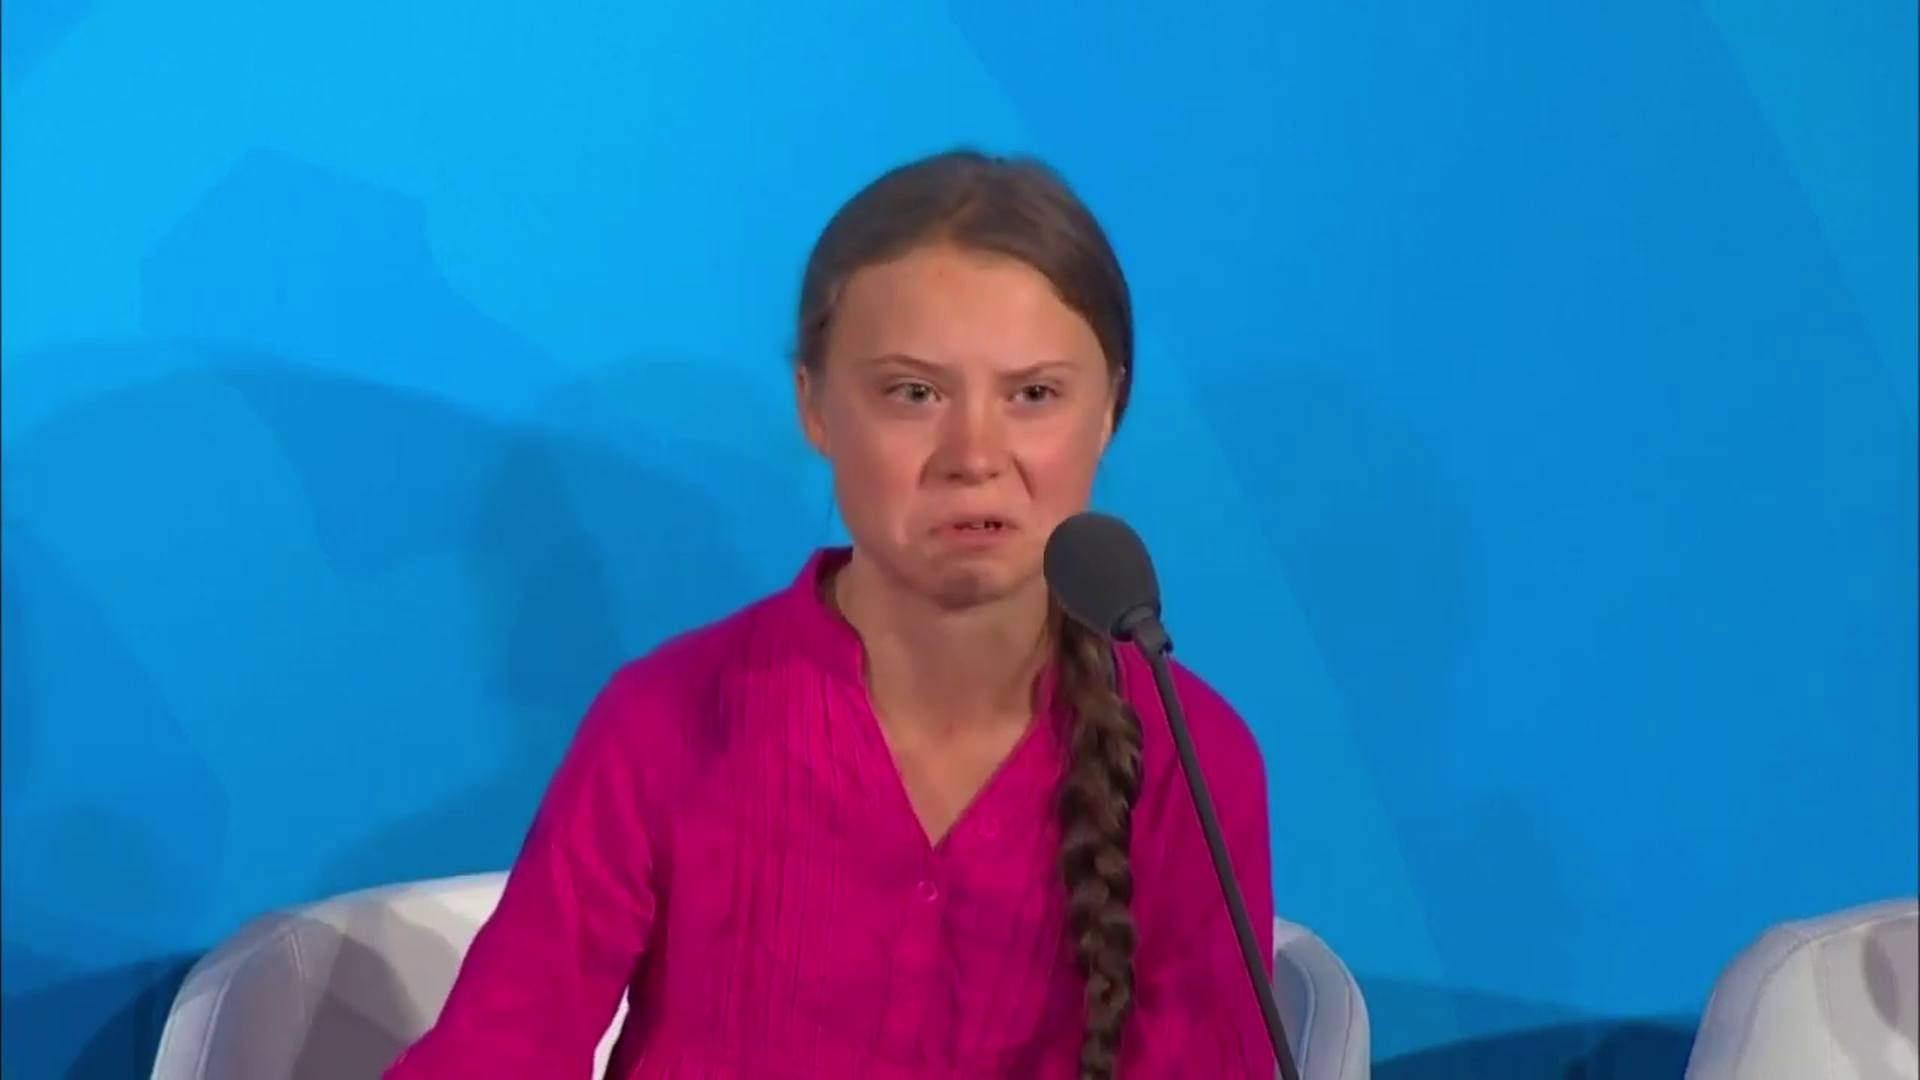 High Quality "How dare you?" - Greta Thunberg Blank Meme Template